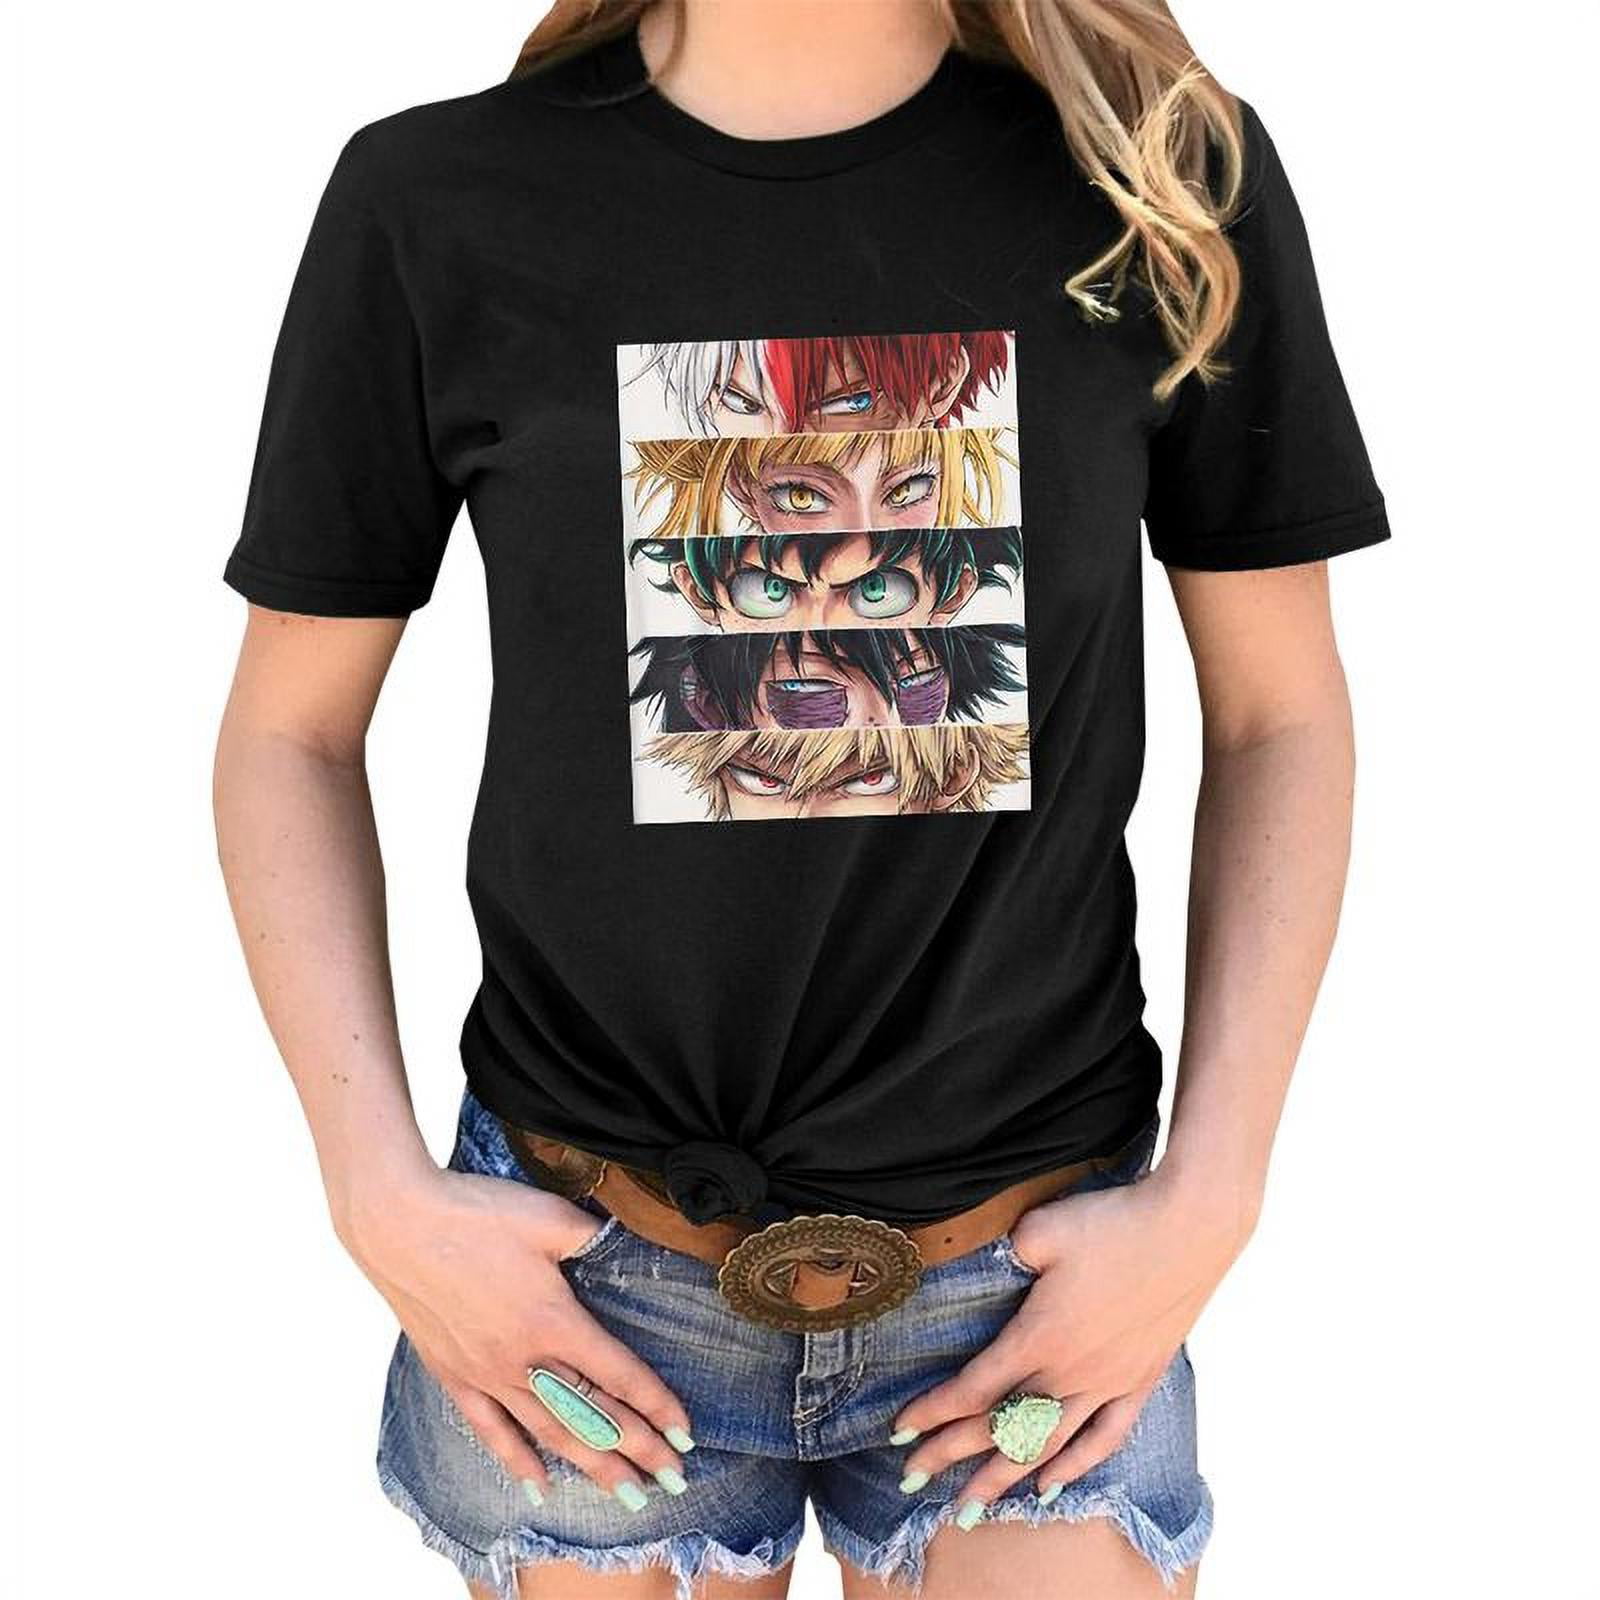 Class A Hreo ACA-demia Kids T Shirt 3D Printed Short Sleeve Fashion Casual Youth Tees Shirts for Girls Boys Children